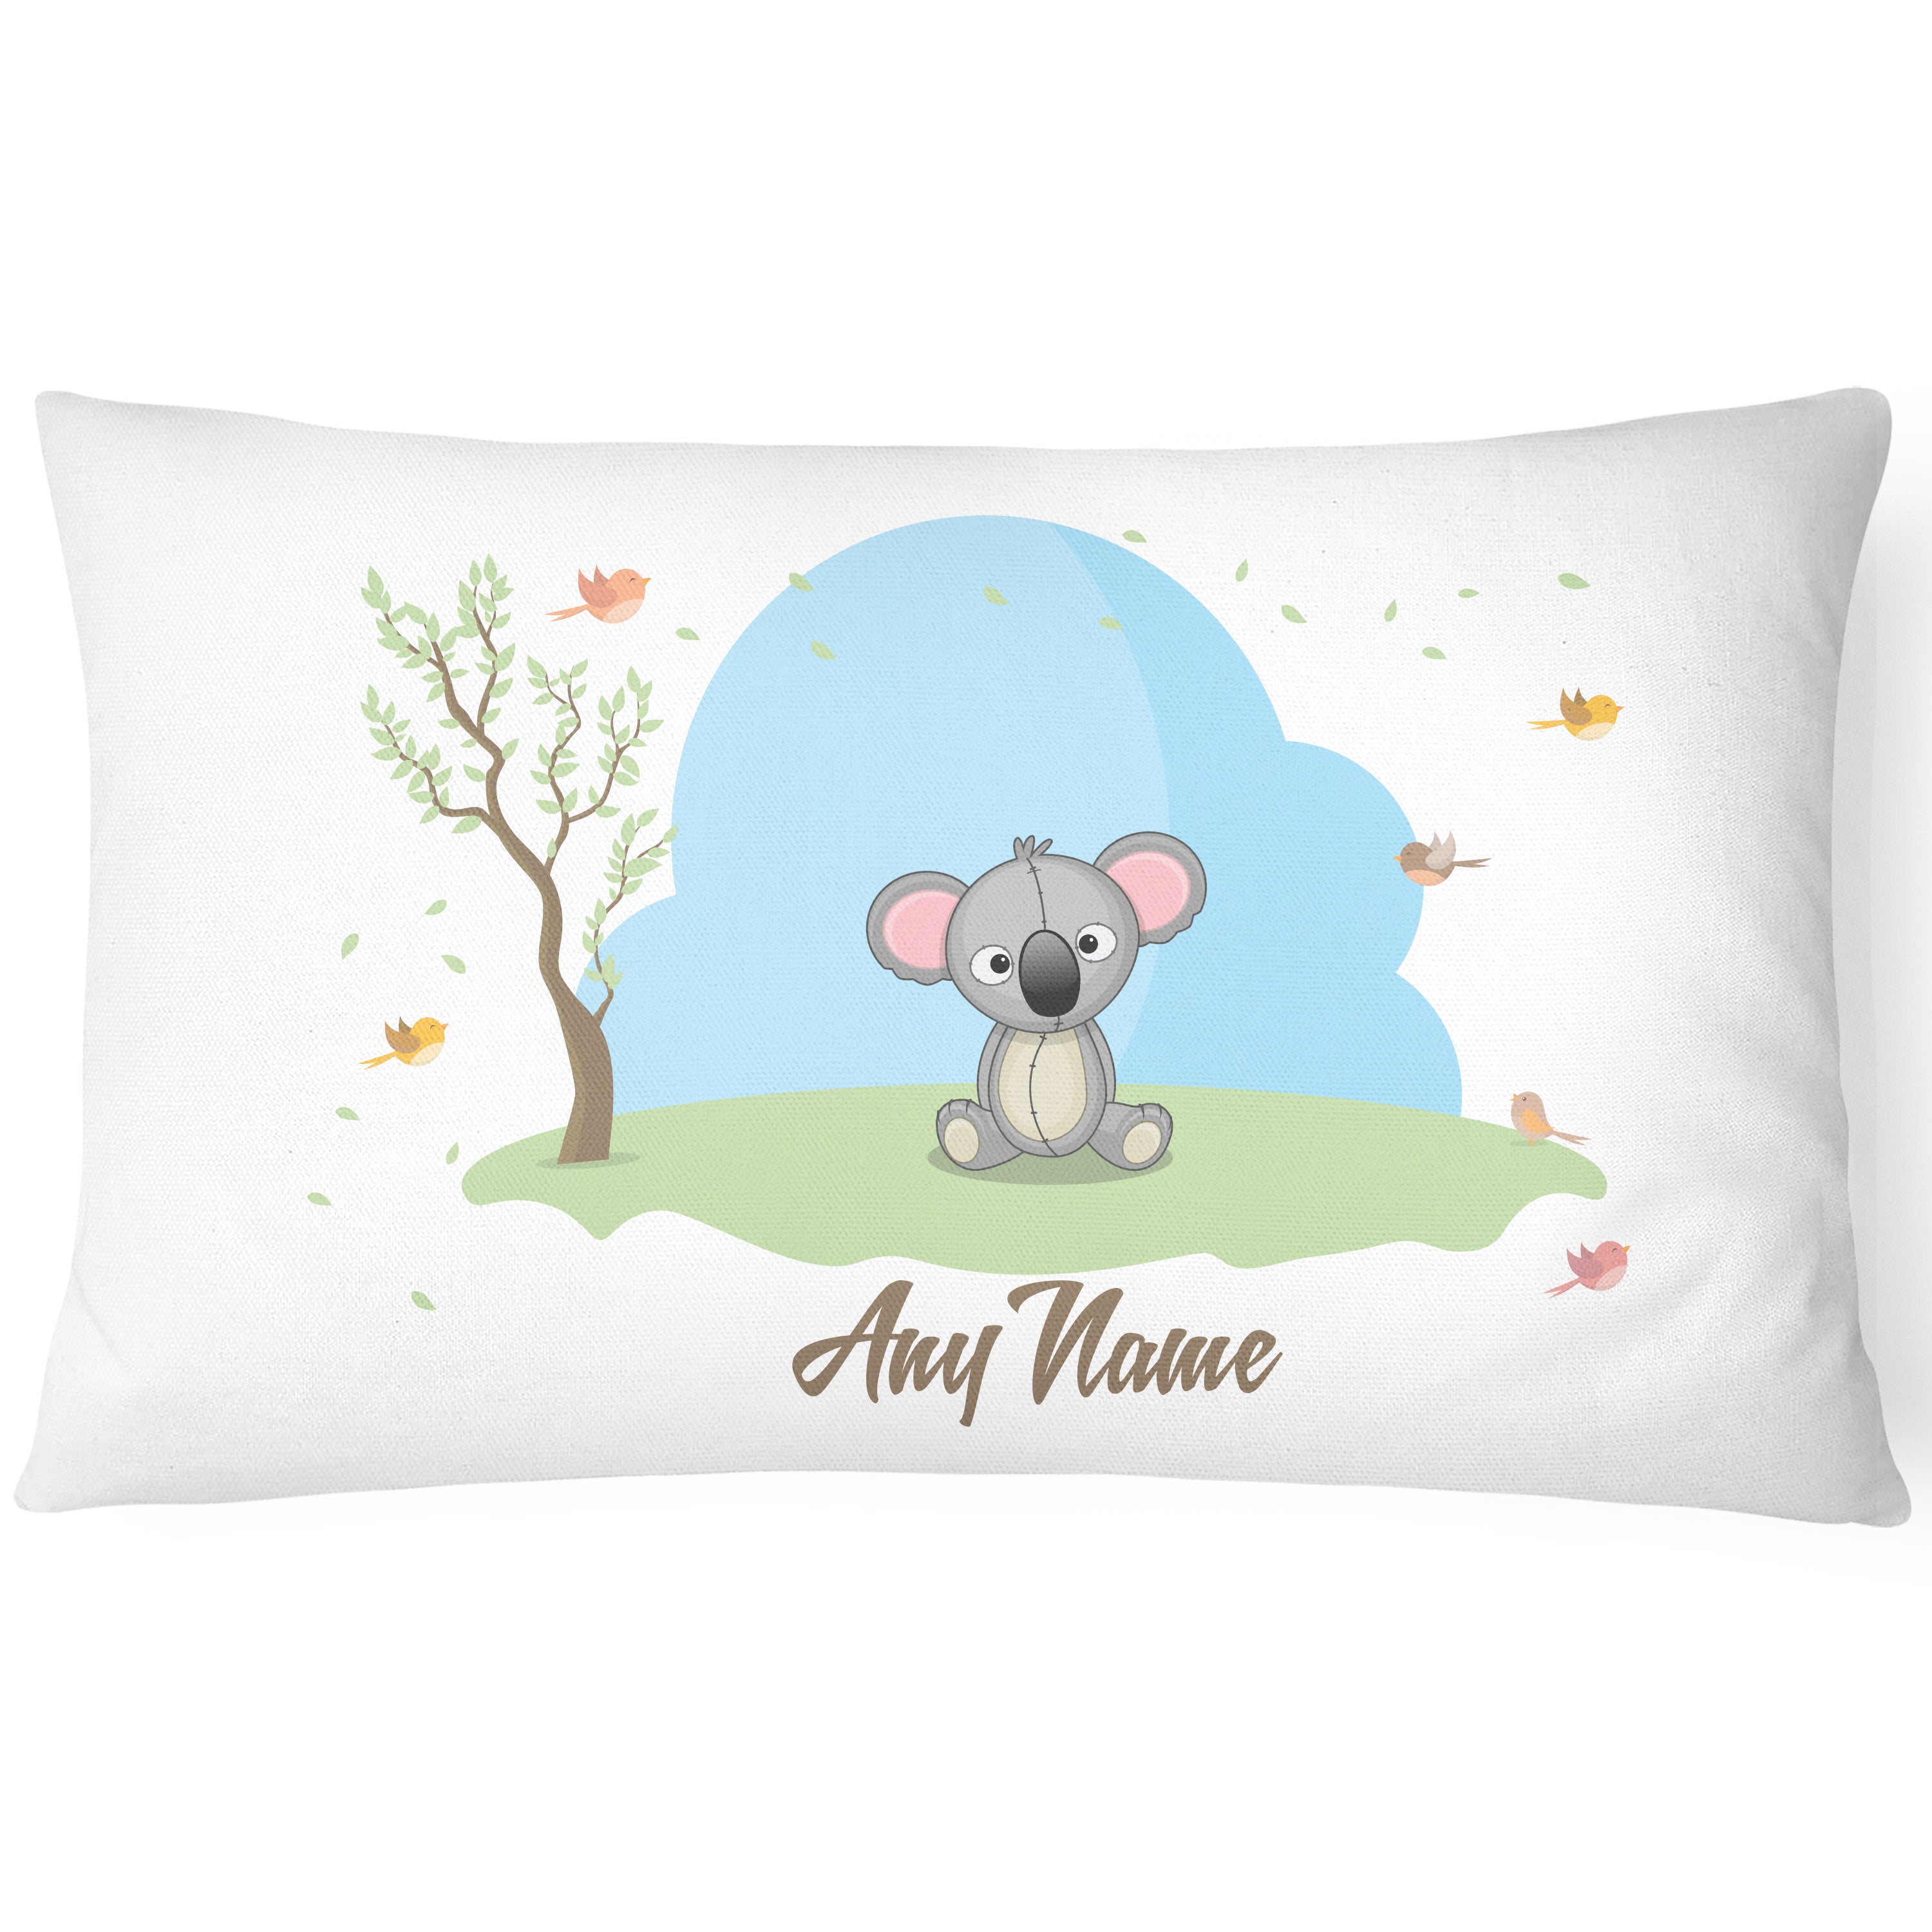 Personalised Children's Pillowcase Cute Animal - Lovely